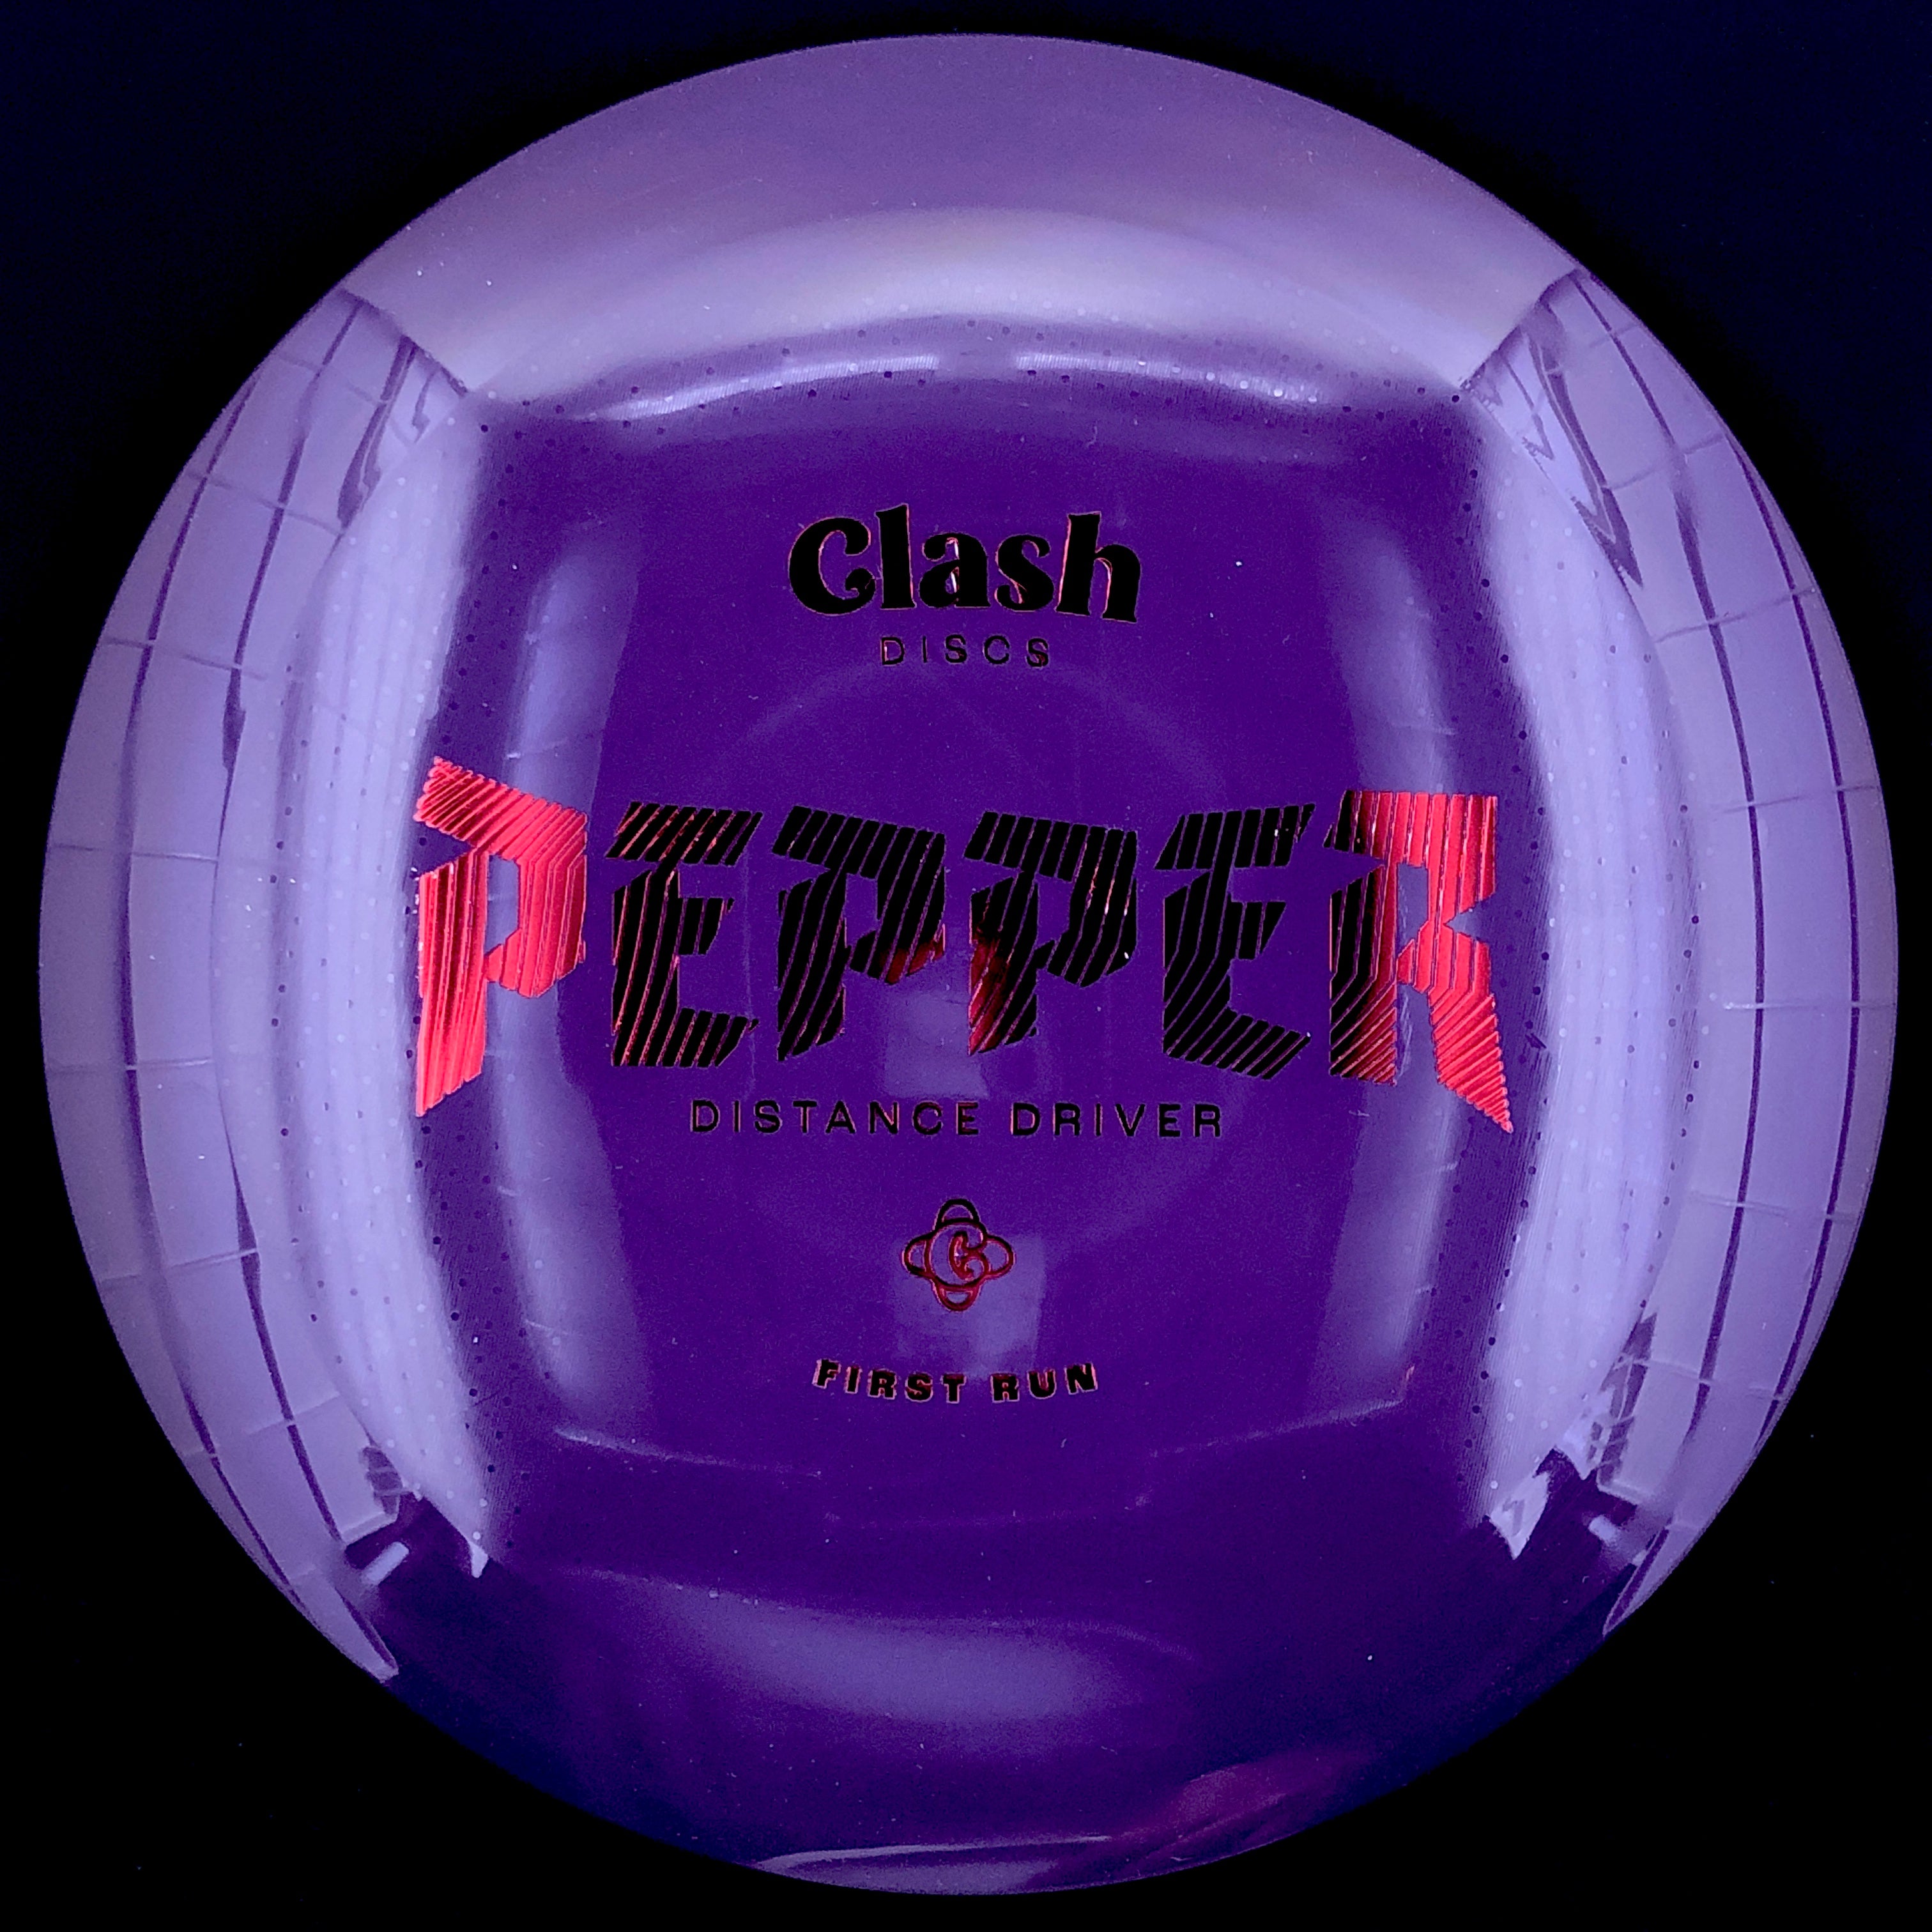 Clash First Run Steady Pepper (Distance Driver)